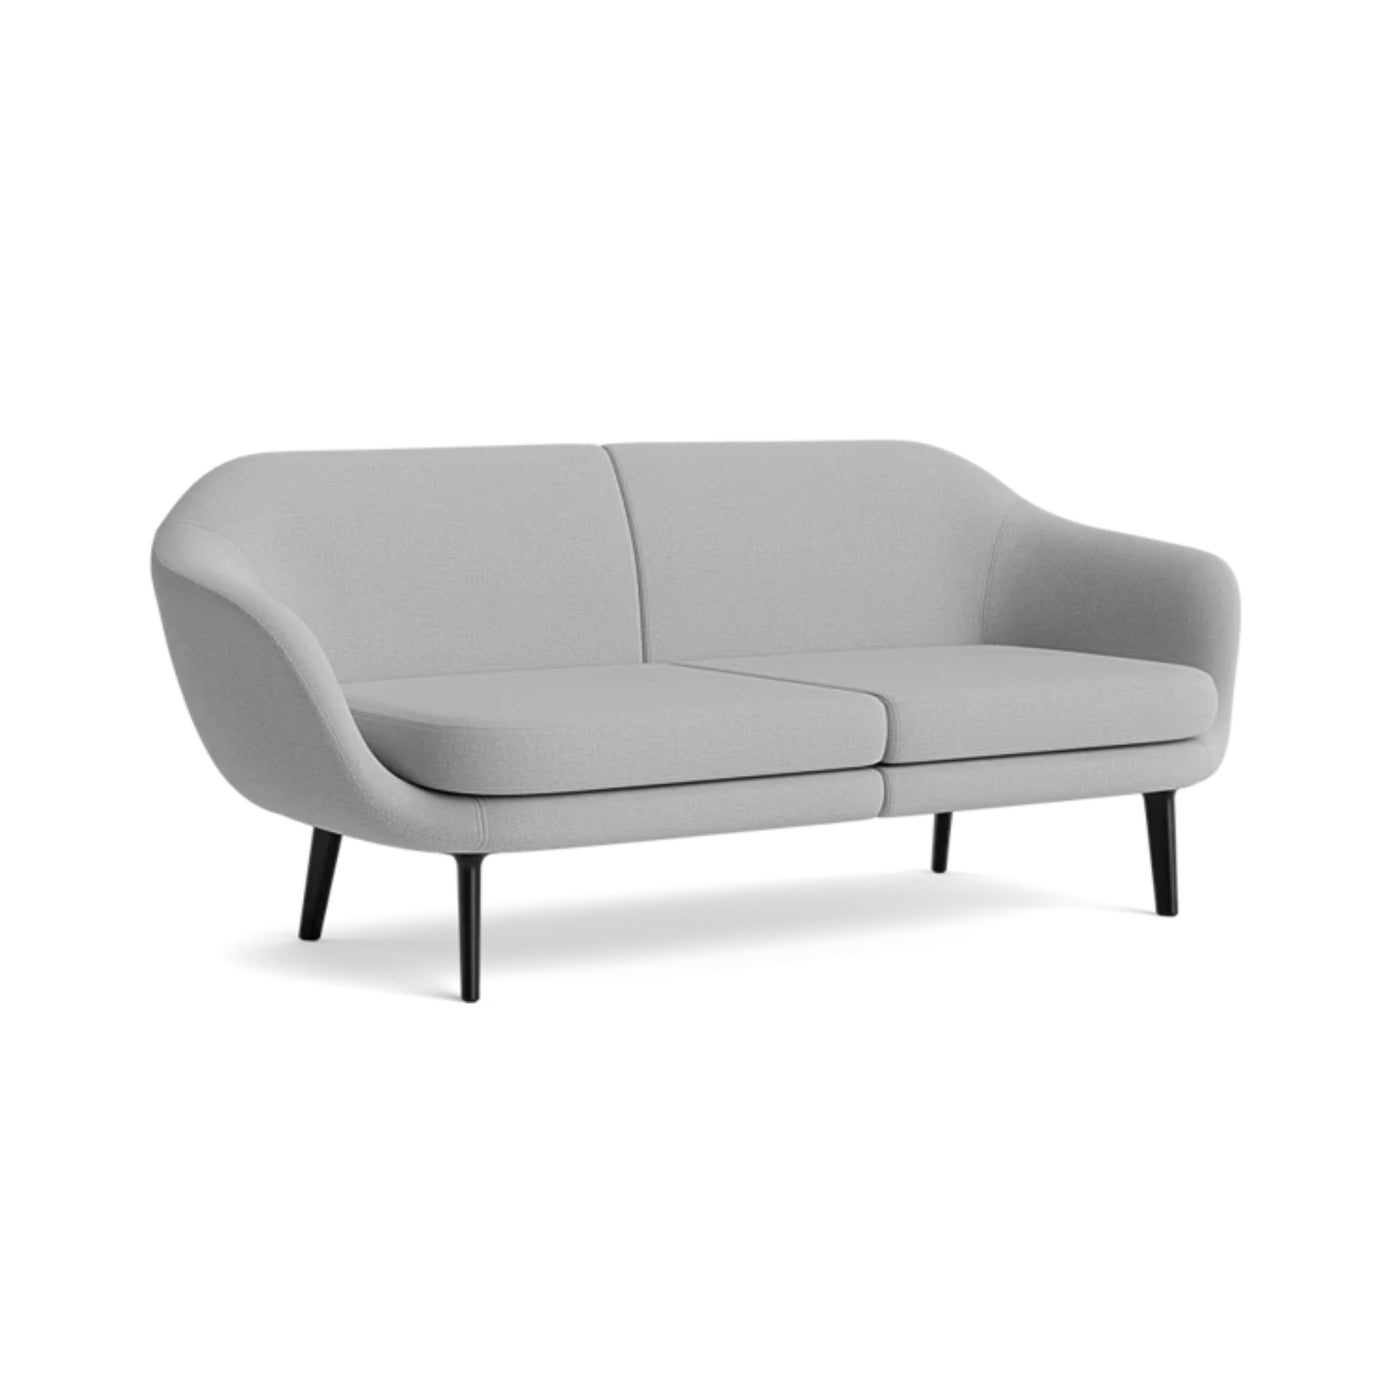 Normann Copenhagen Sum Modular 2 Seater Sofa. Made to order from someday designs. #colour_steelcut-trio-133